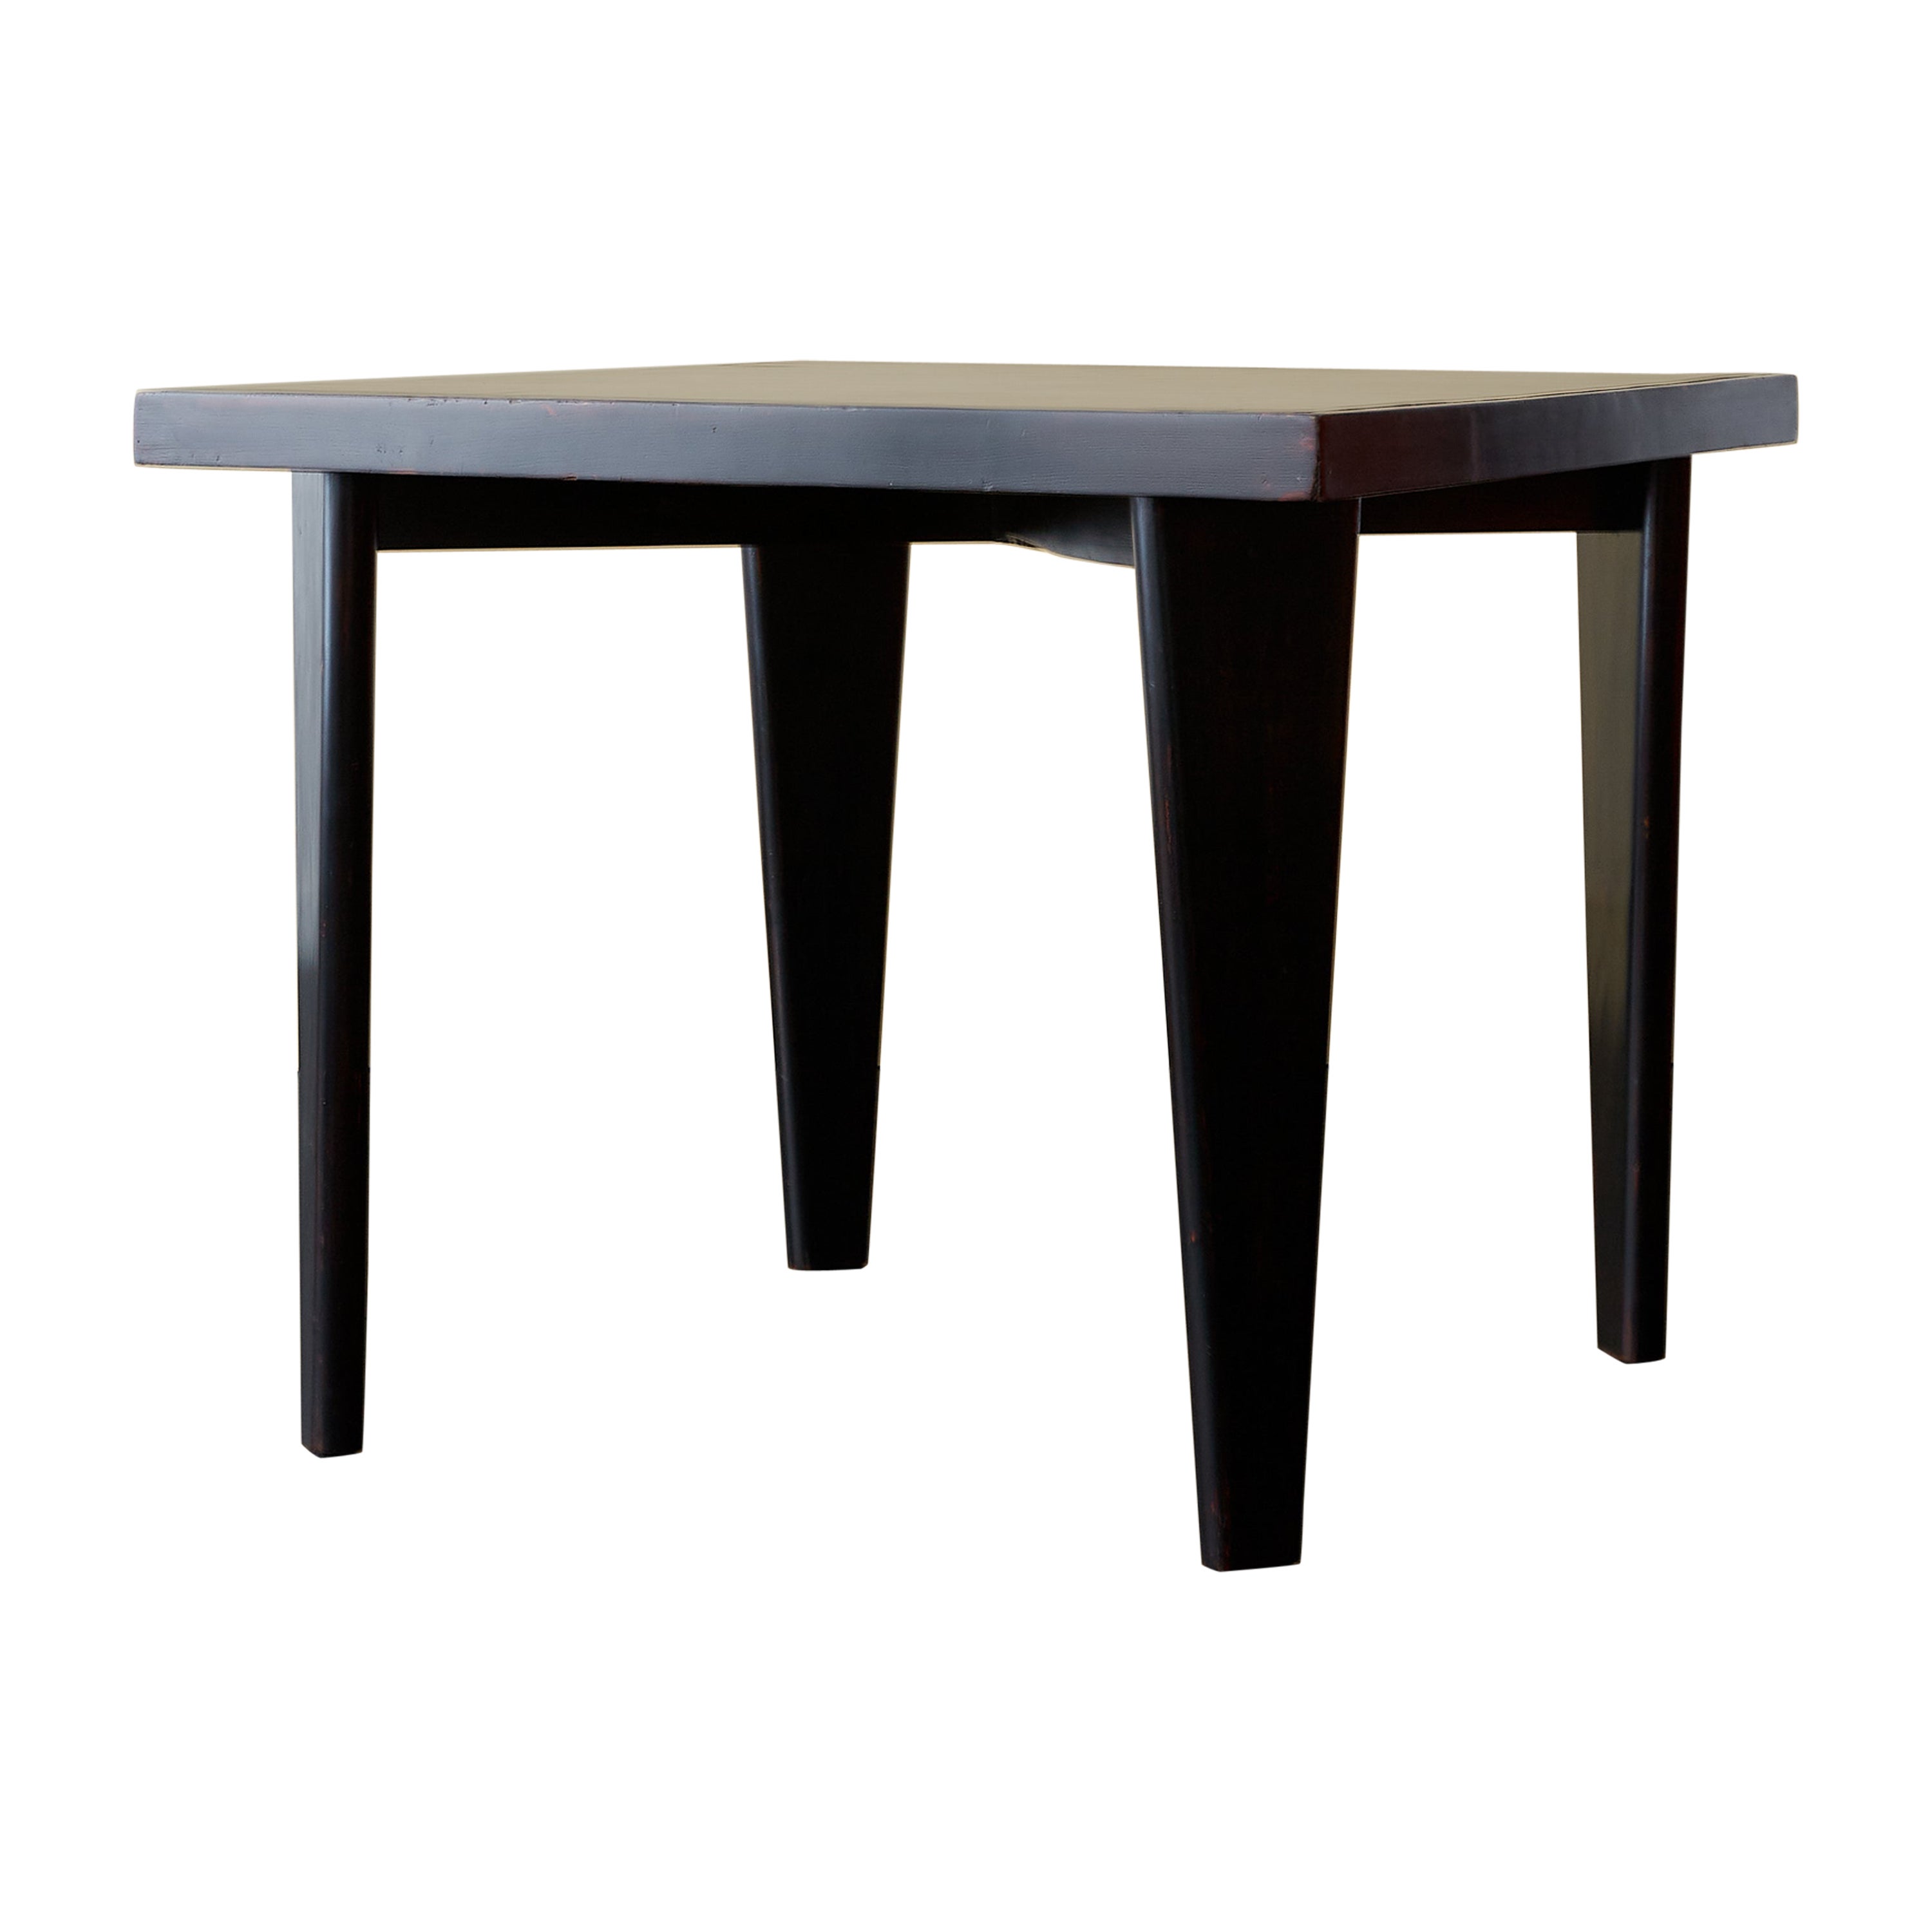 Pierre Jeanneret Square Table c. 1959. Model PJ-TA-04-A. For Sale